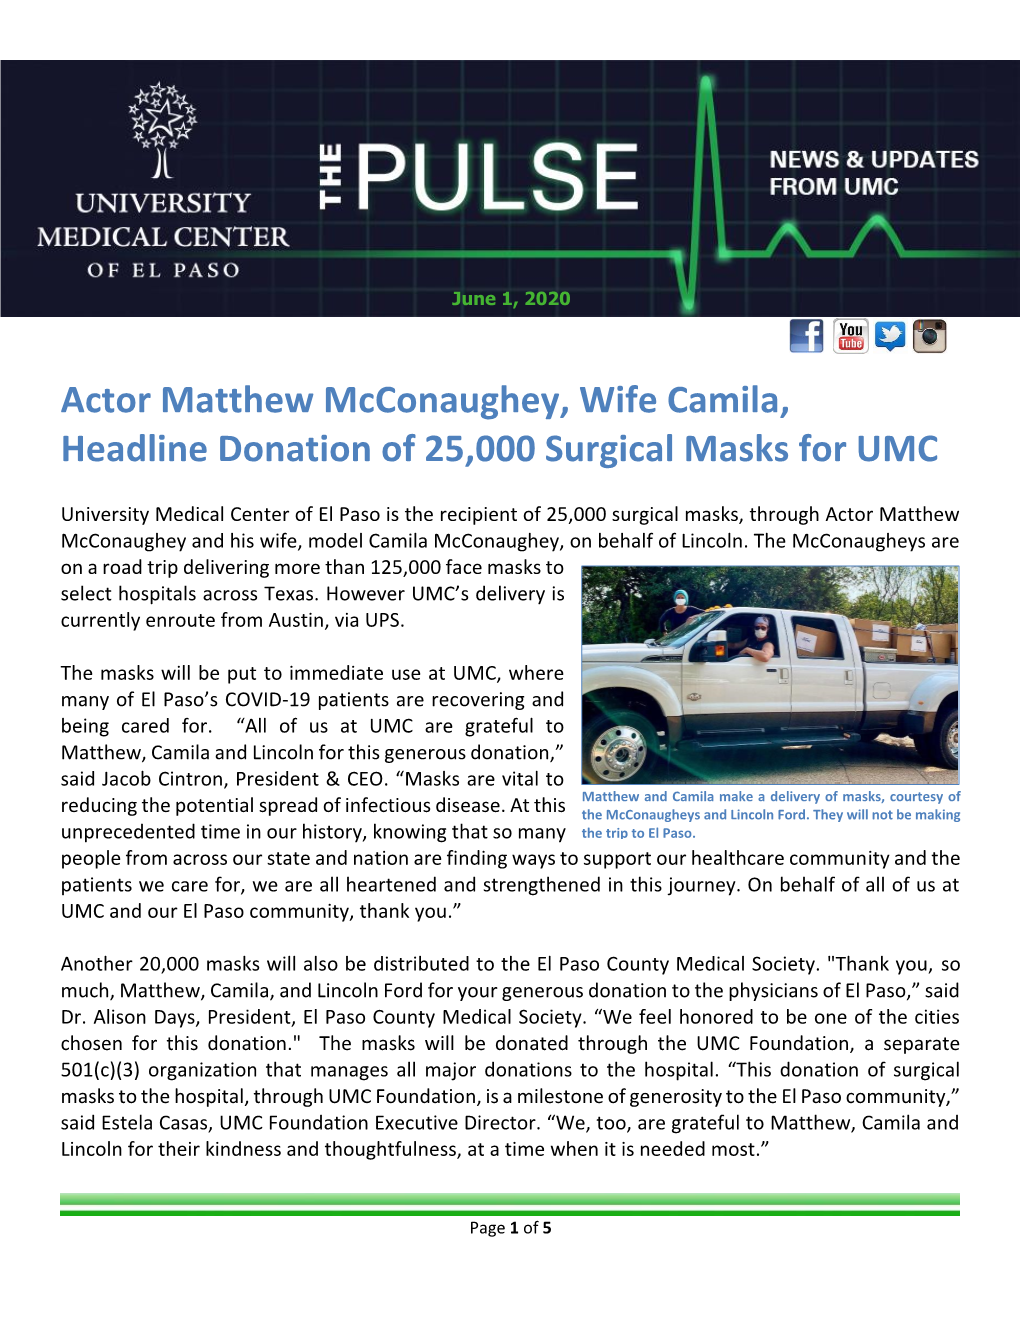 Actor Matthew Mcconaughey, Wife Camila, Headline Donation of 25,000 Surgical Masks for UMC